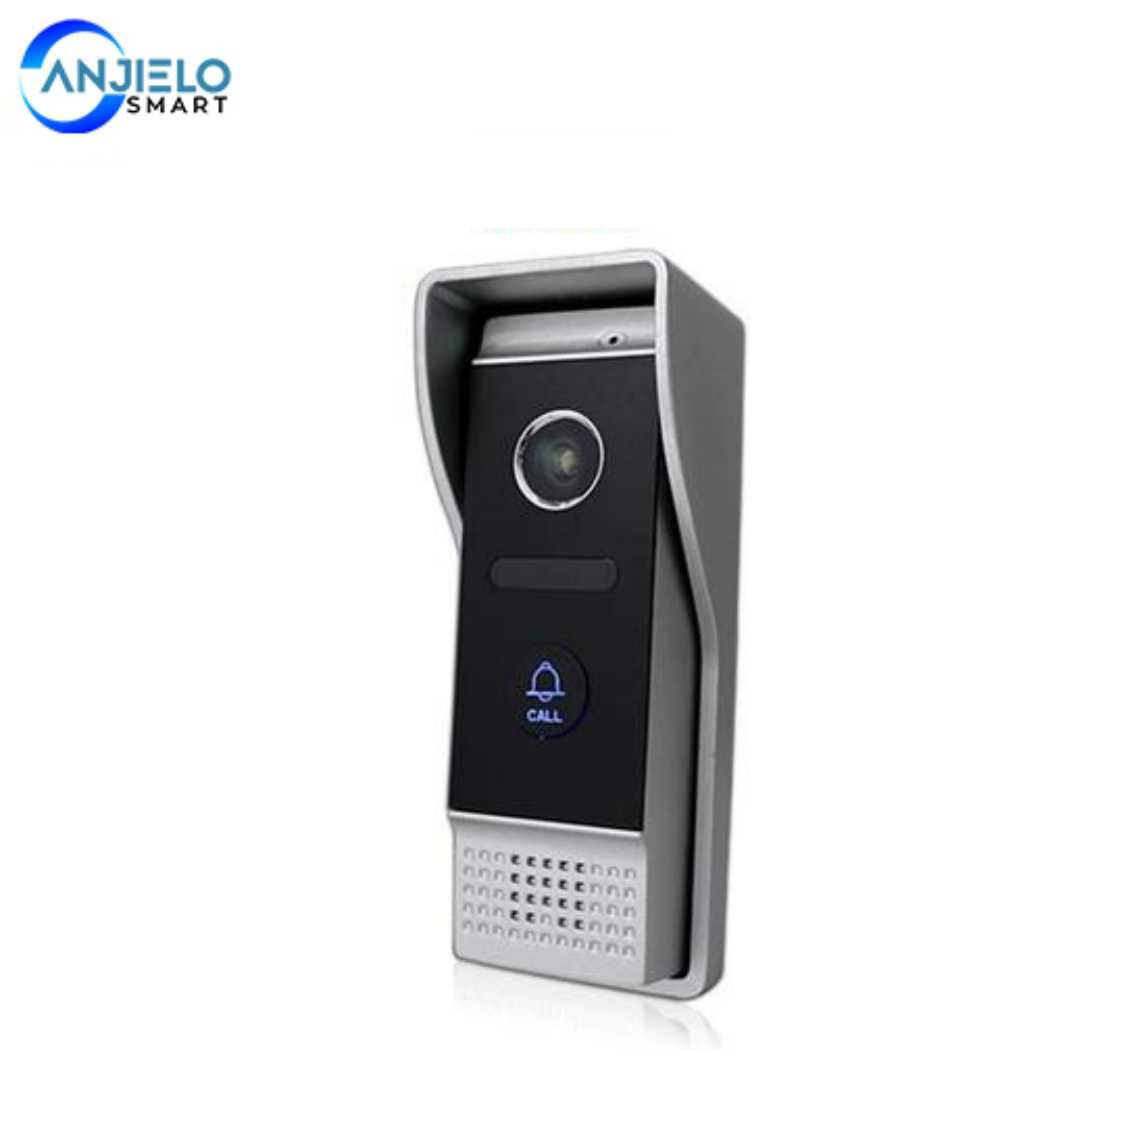 AnjieloSmart WiFi Tuya 7" Video Door Phone Intercom System with 1080P/AHD Wired Doorbell Camera Remote Unlock Motion Detection